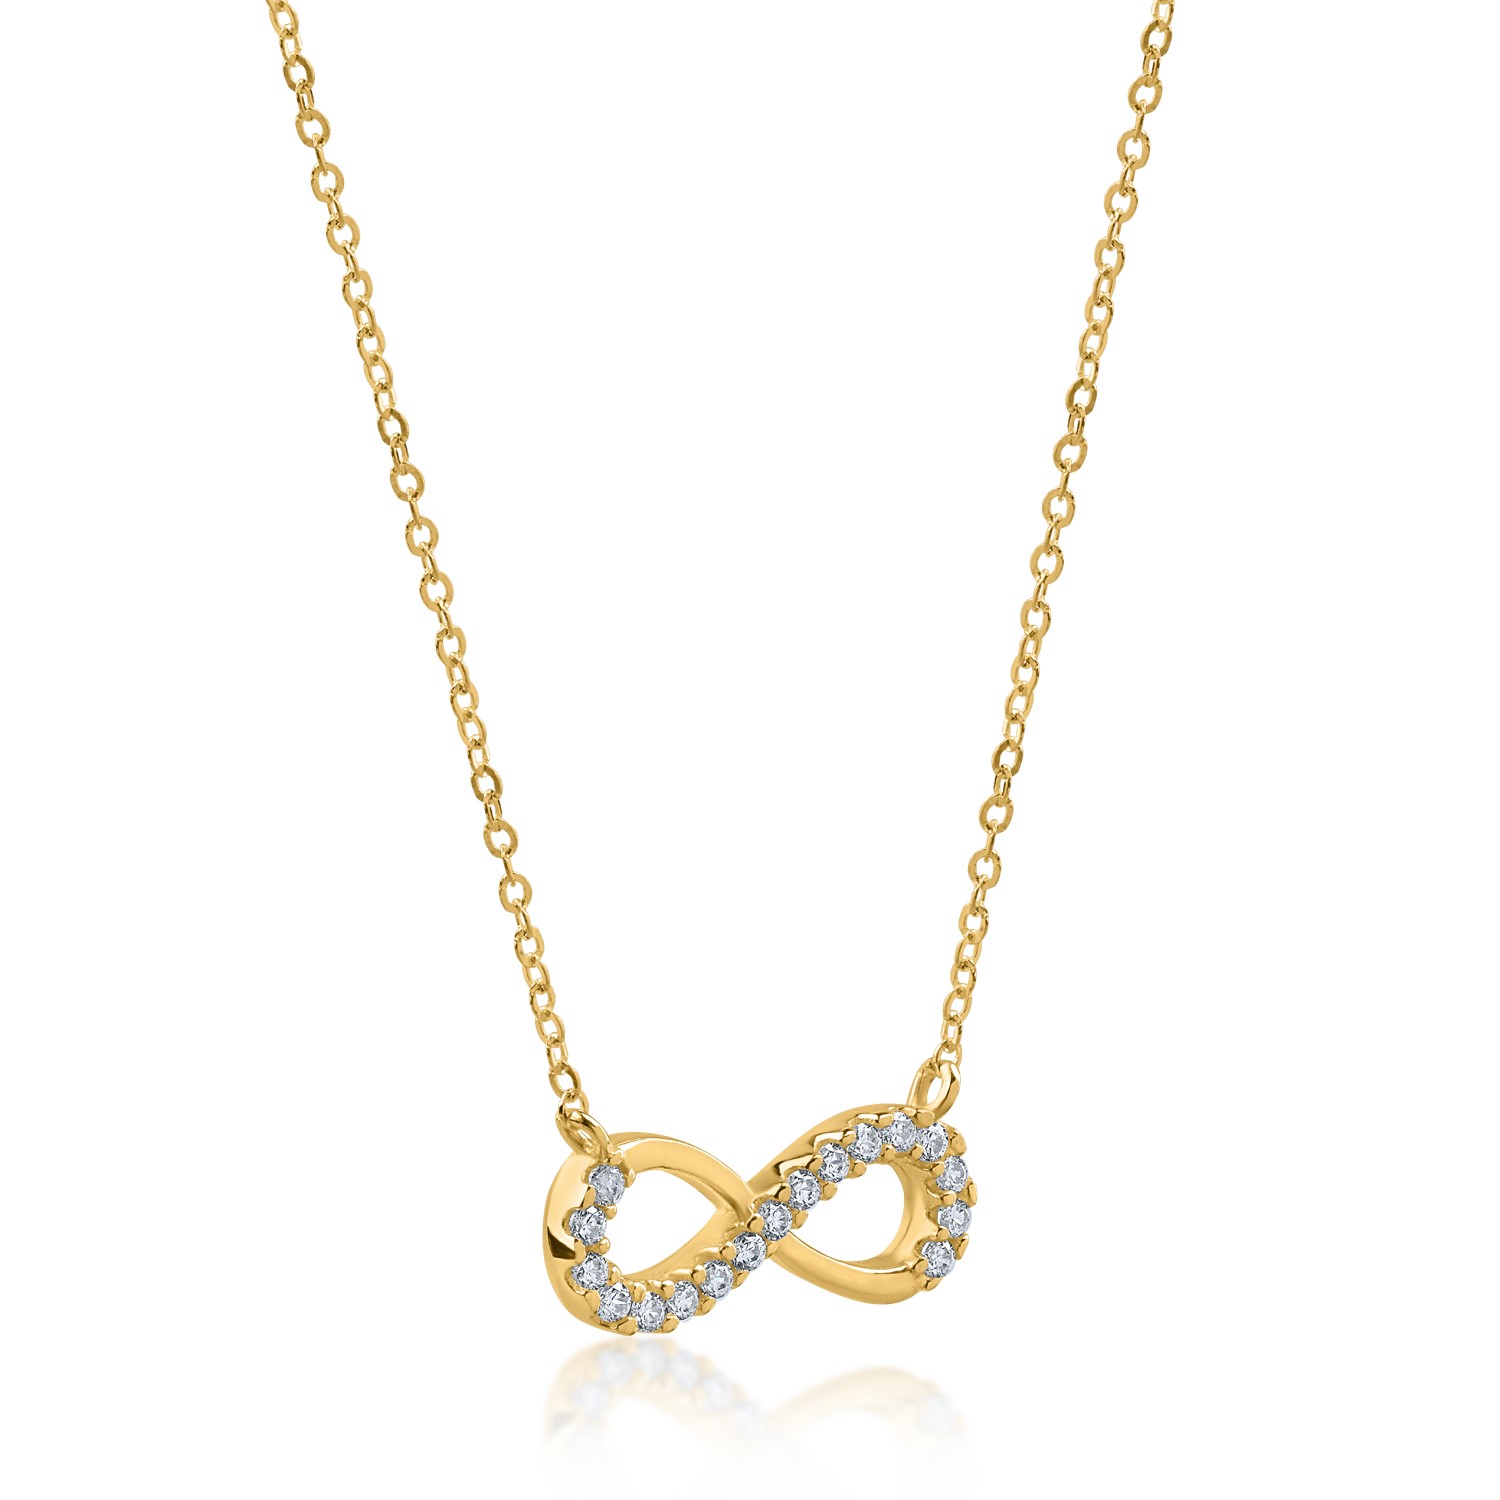 Yellow gold infinity pendant necklace with zirconia